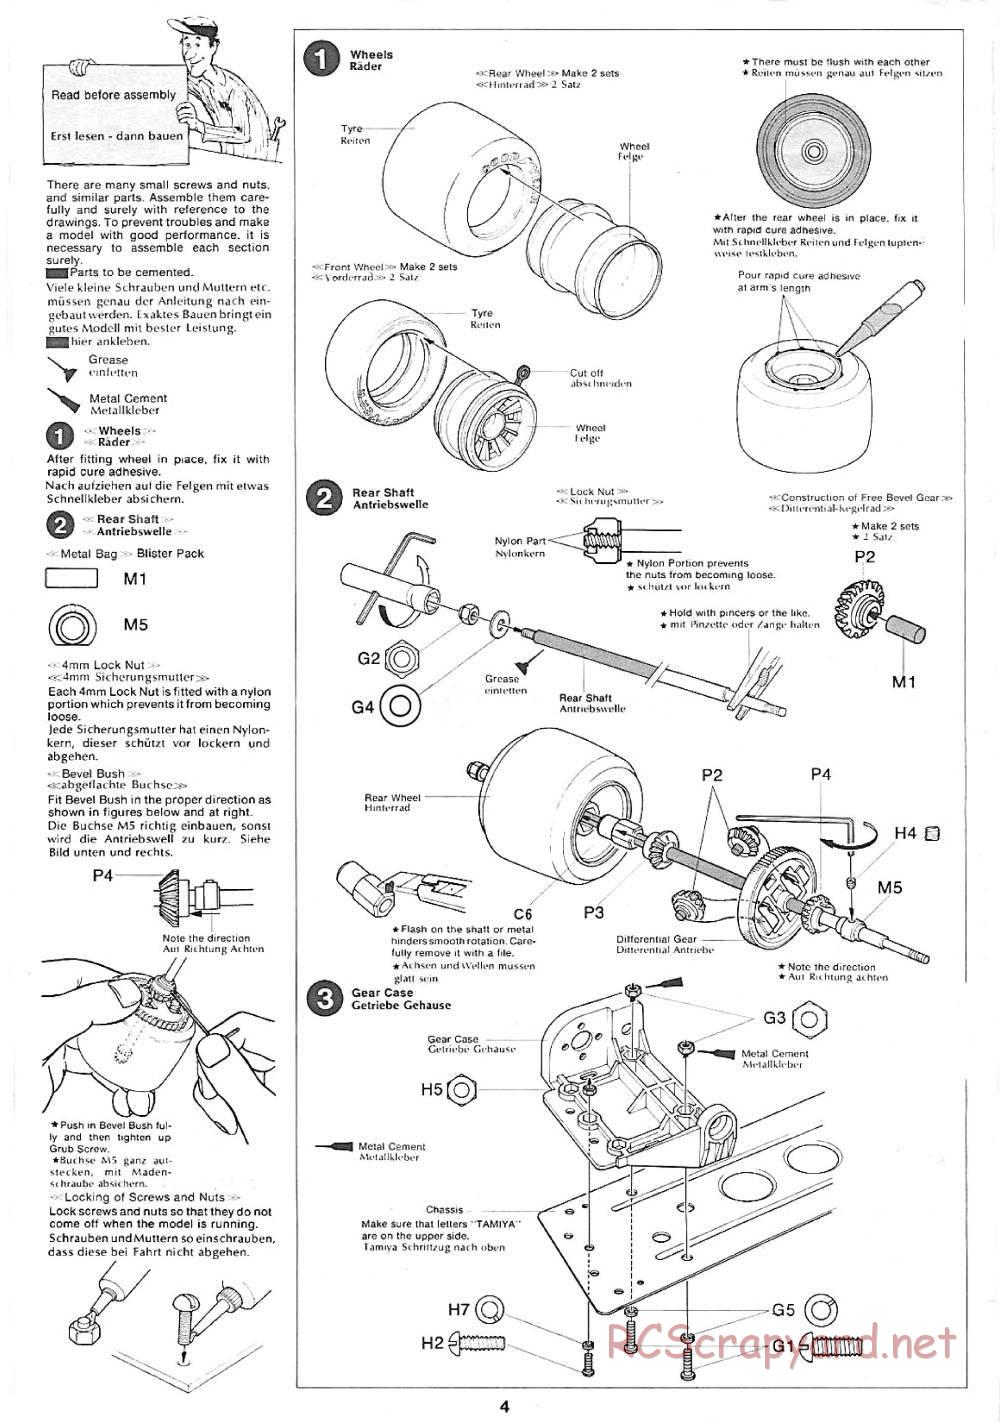 Tamiya - Ralt RT2 Hart 420R (F2) - 58018 - Manual - Page 4